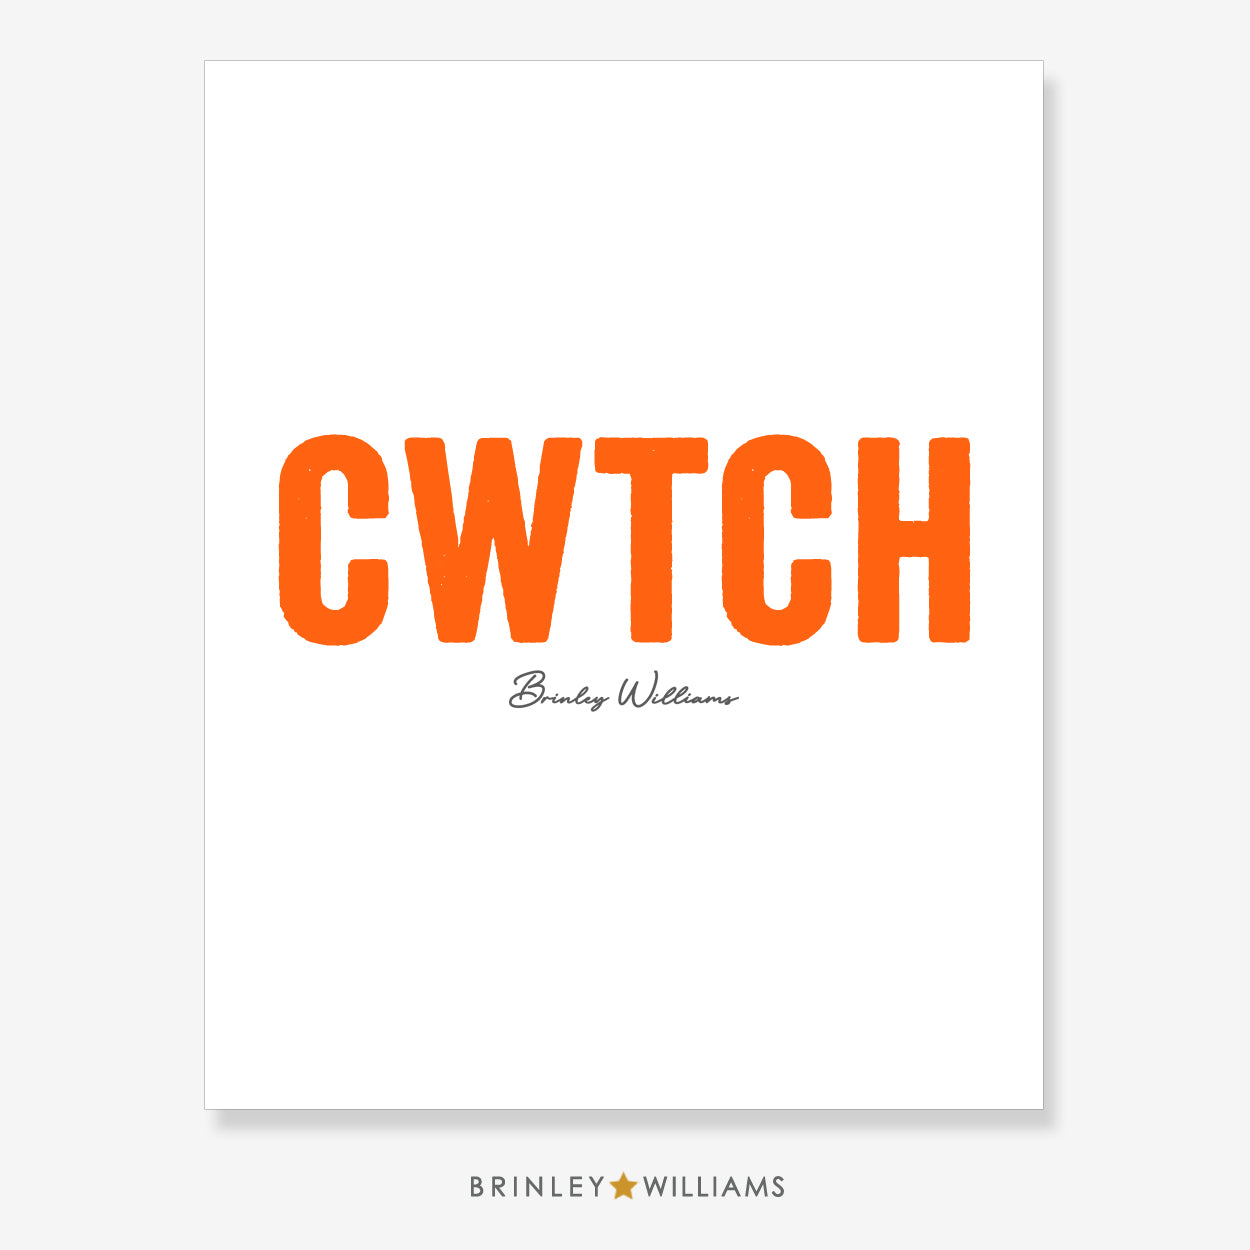 Big Cwtch Wall Art Poster - Orange